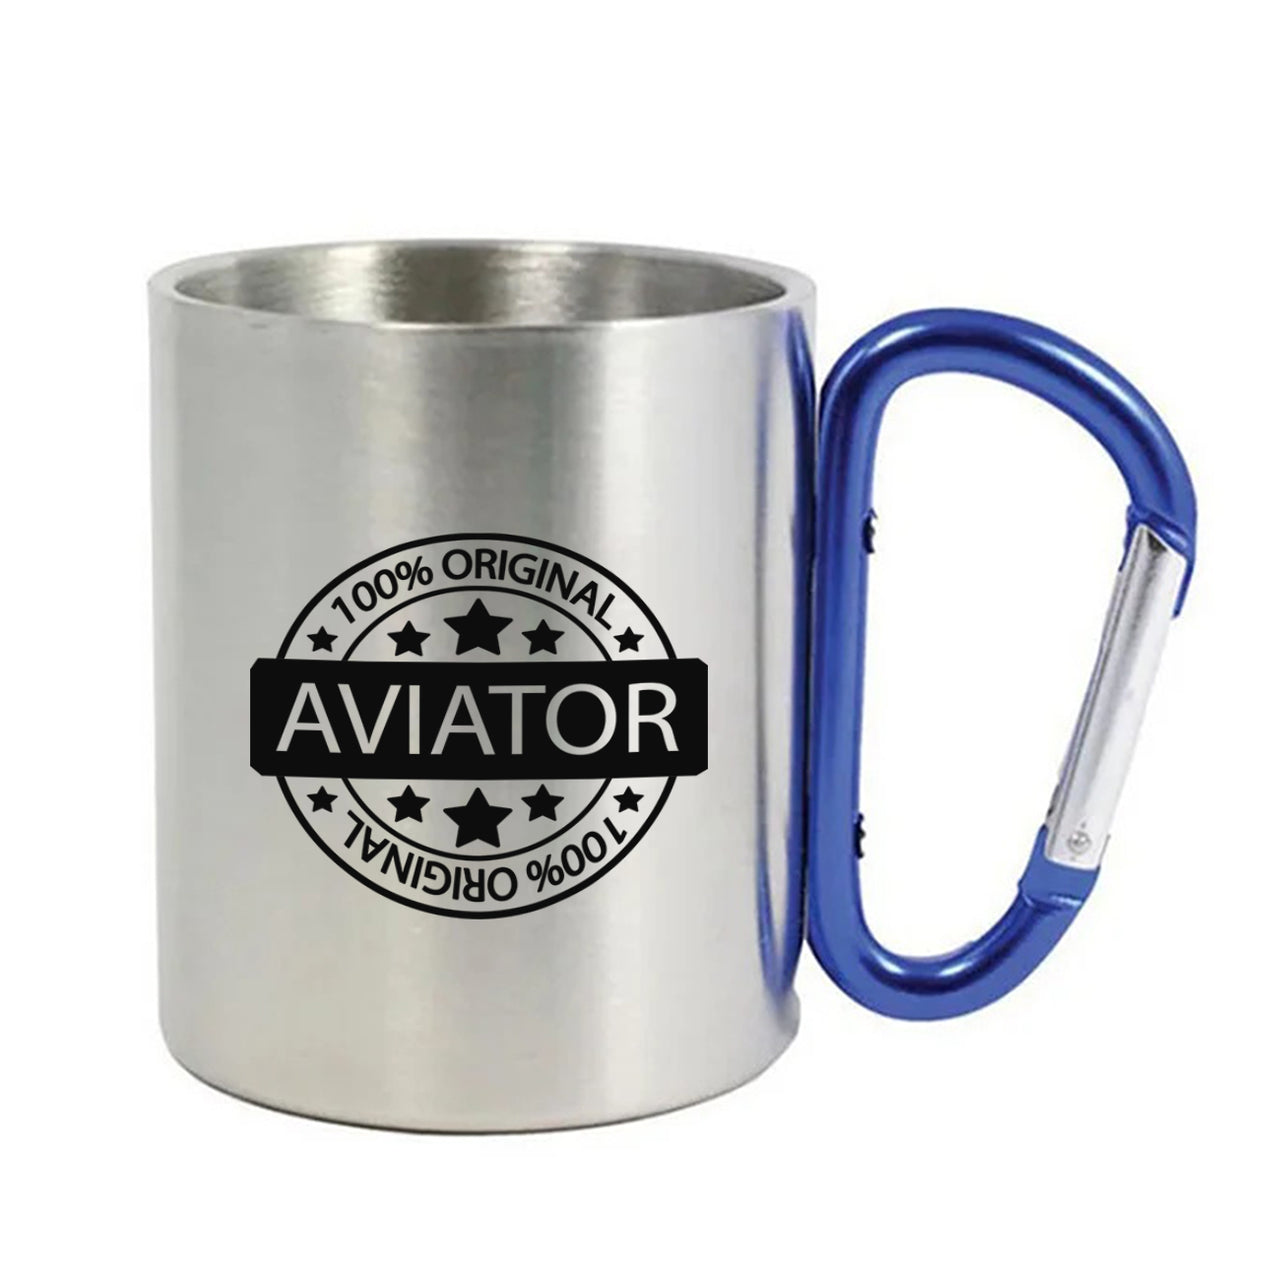 %100 Original Aviator Designed Stainless Steel Outdoors Mugs